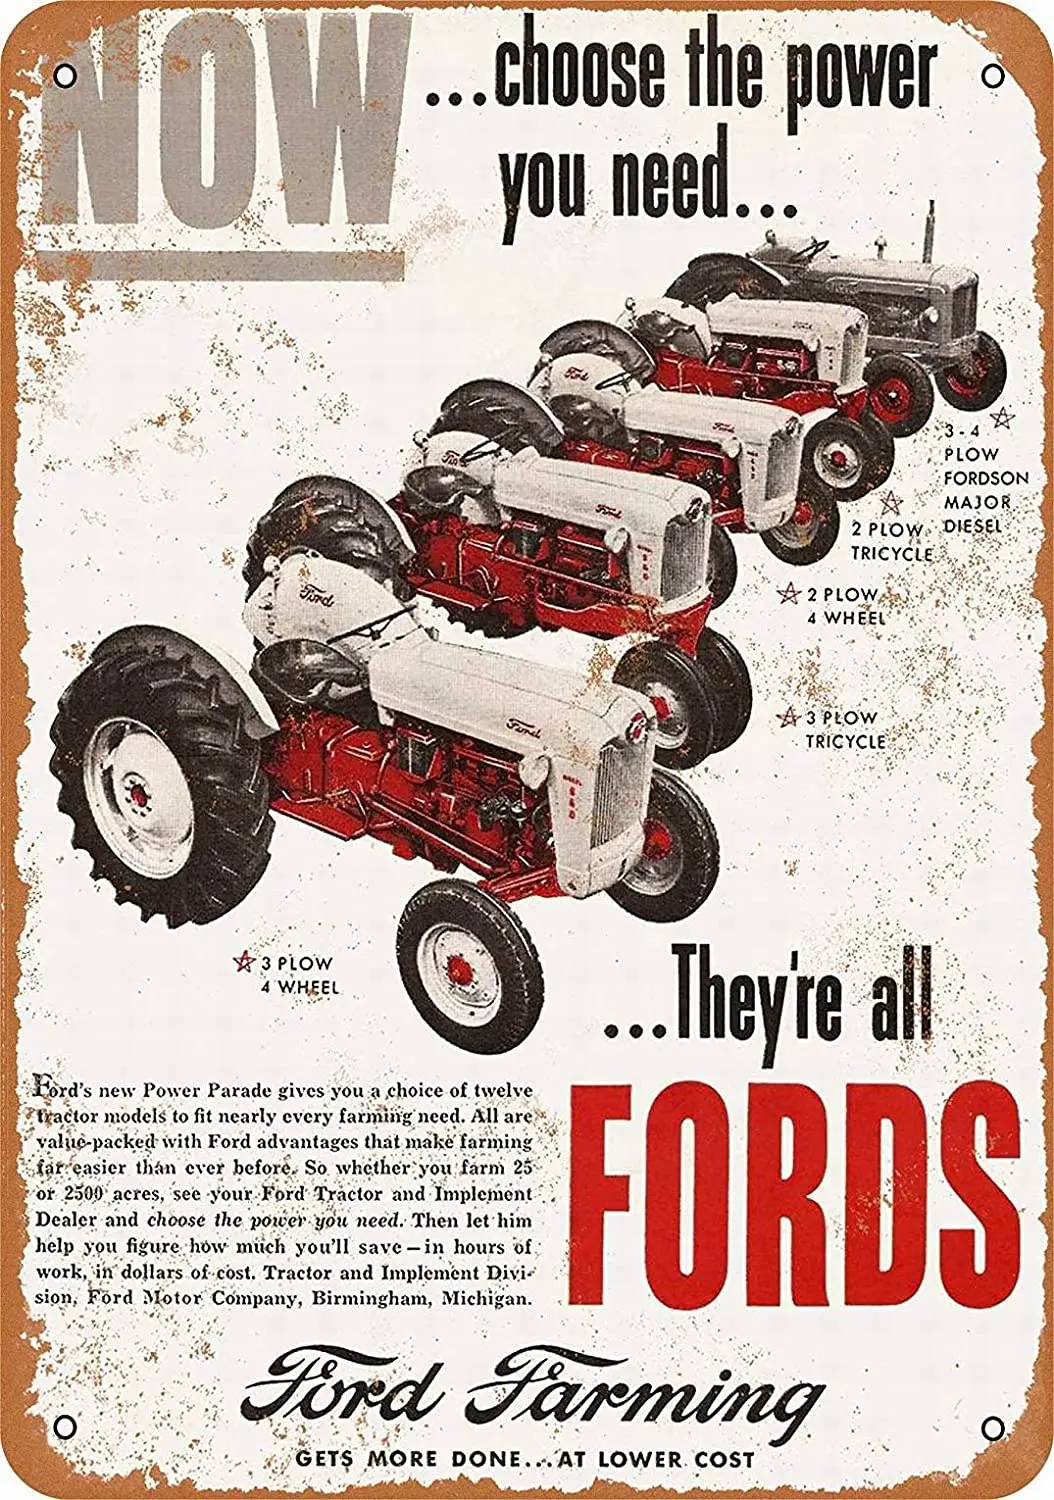 

LoMall 8x12 Metal Sign - Ford Farming Tractors - Vintage Retro Wall Decor Art